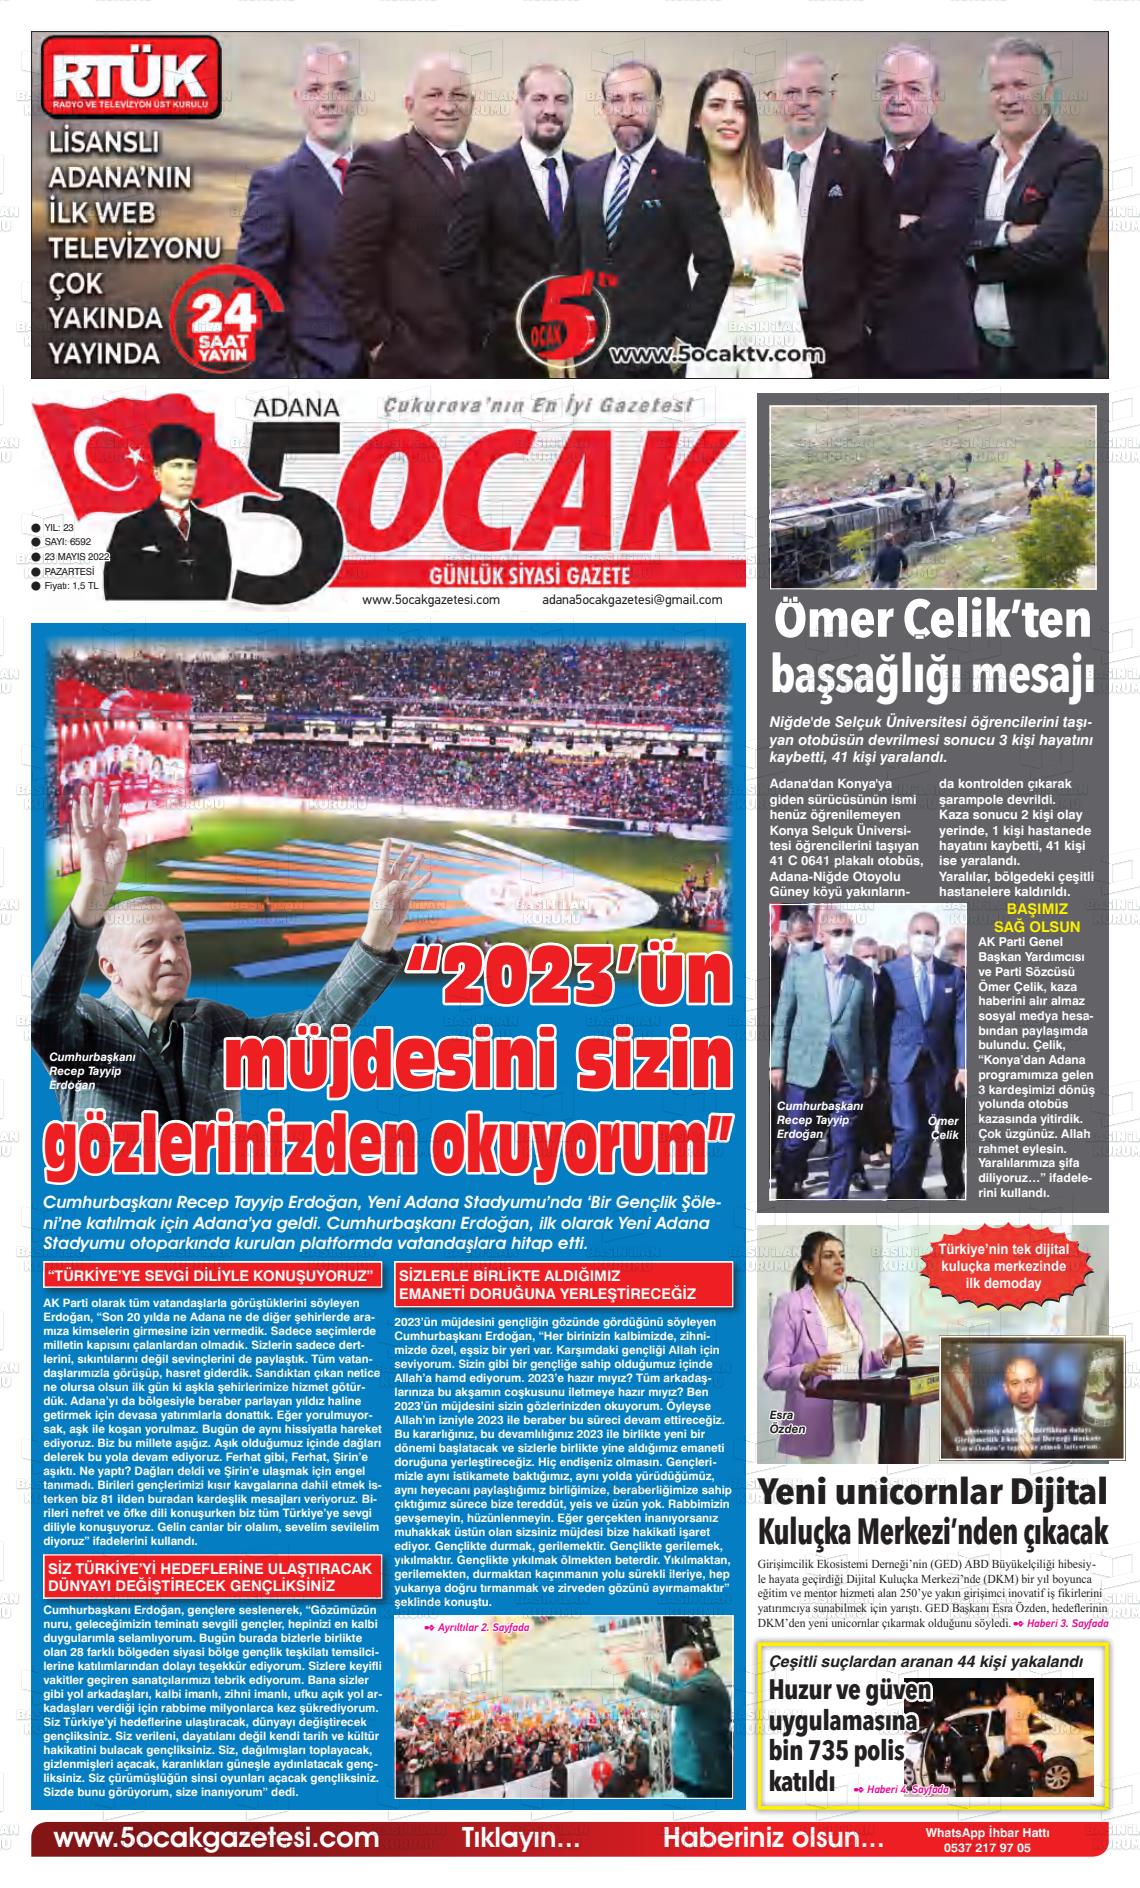 23 Mayıs 2022 Adana 5 Ocak Gazete Manşeti